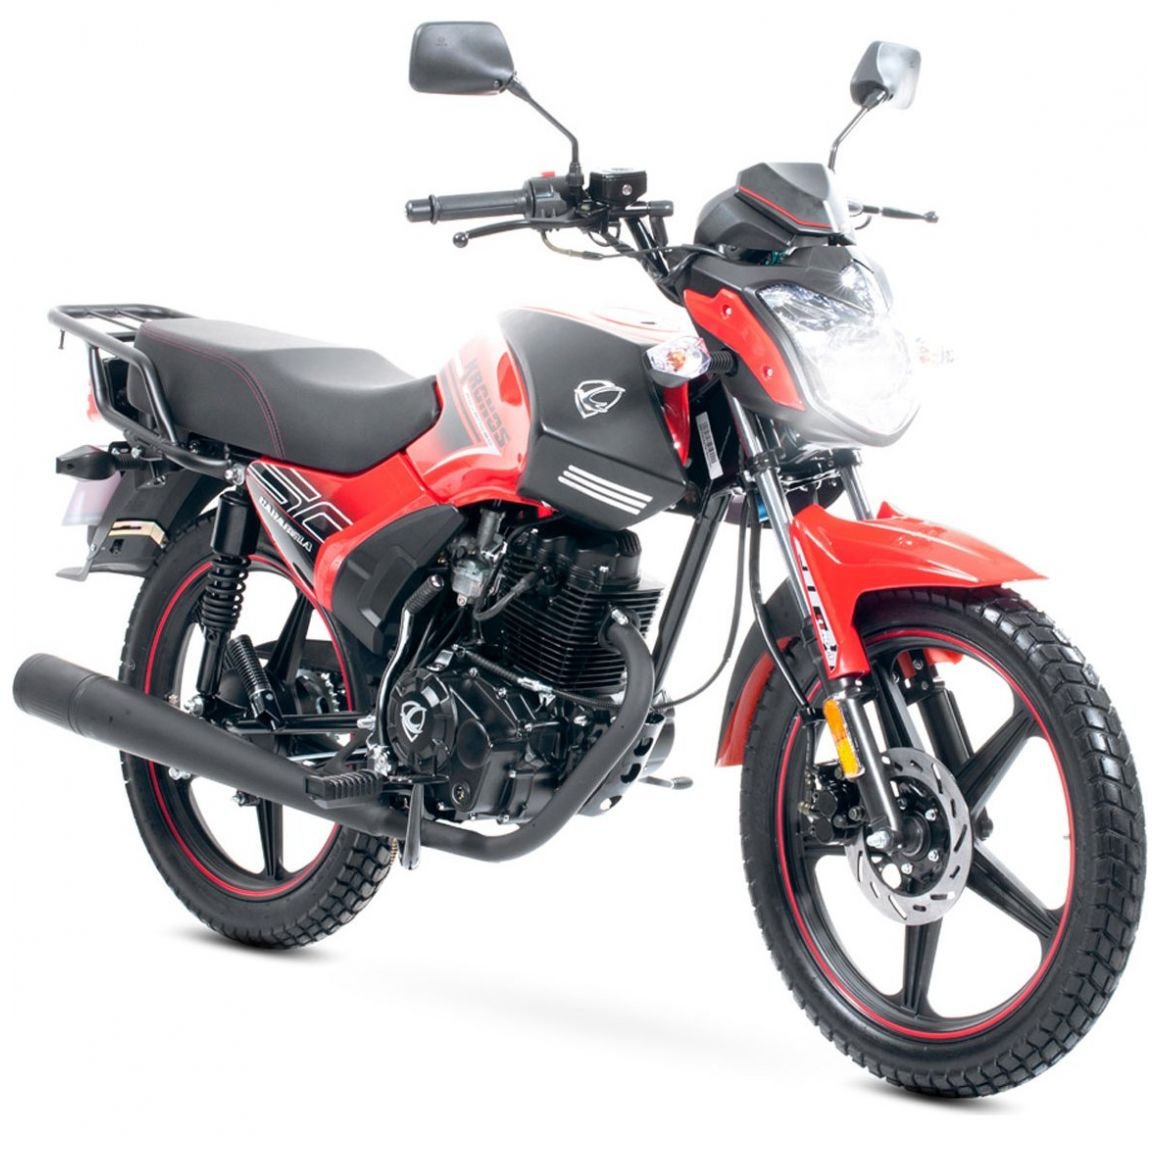 Motocicleta Kronos Advance Roja 21 2021 Carabela